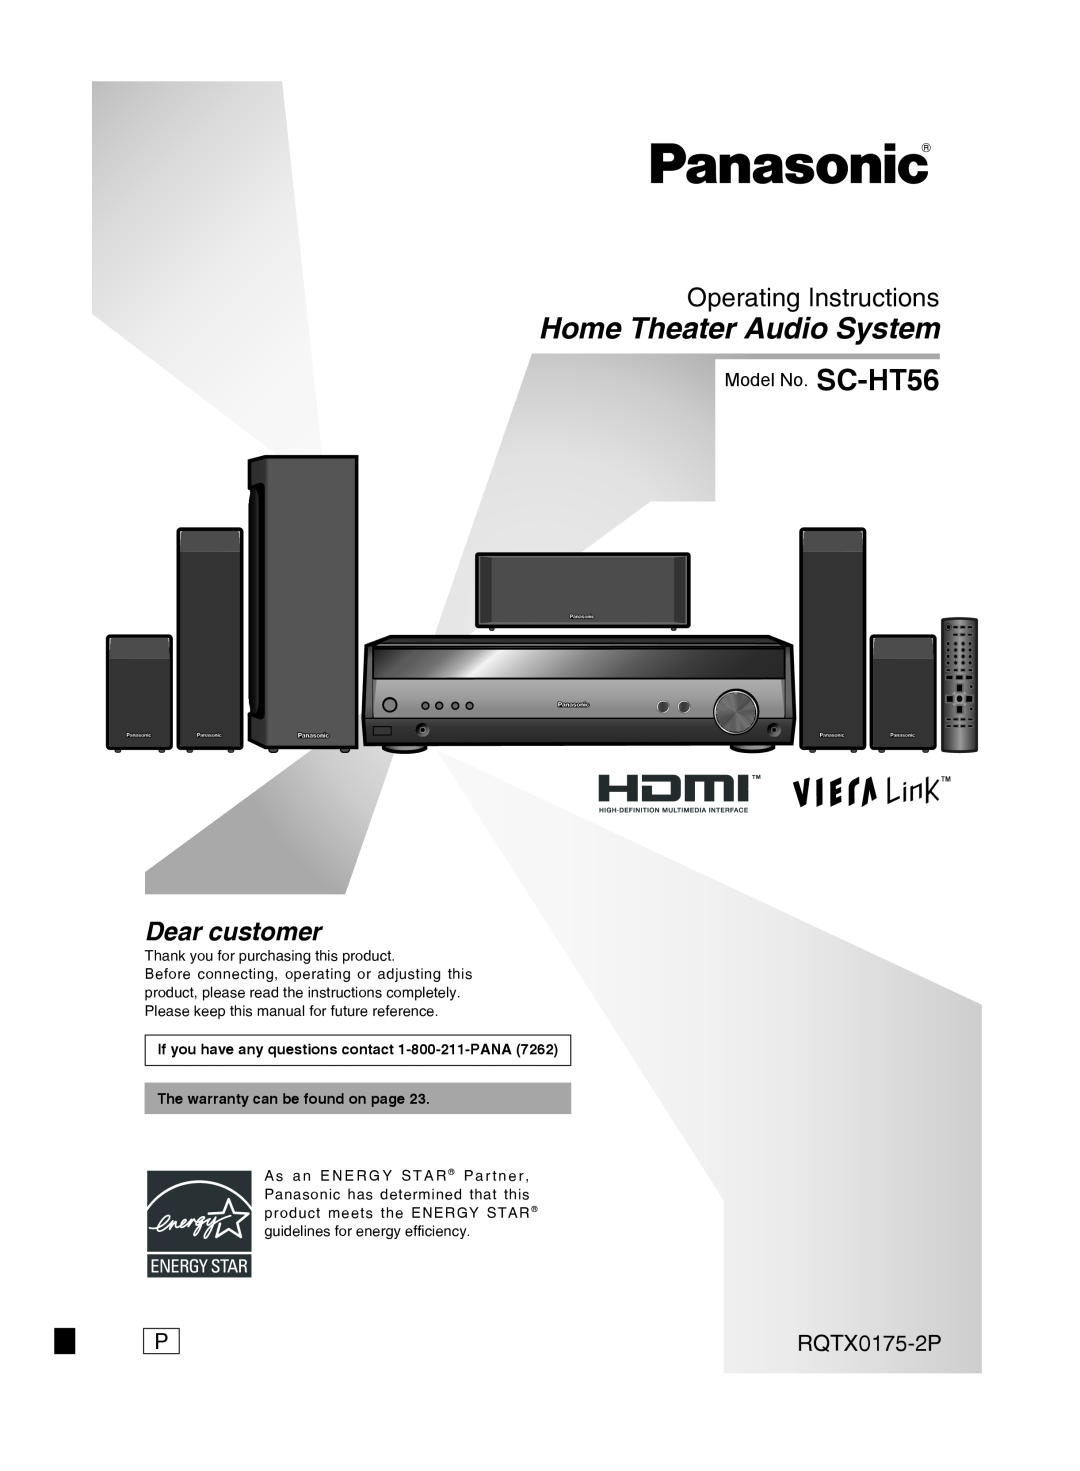 Panasonic SCHT56 operating instructions RQTX0175-2P, Home Theater Audio System, Operating Instructions, Model No. SC-HT56 